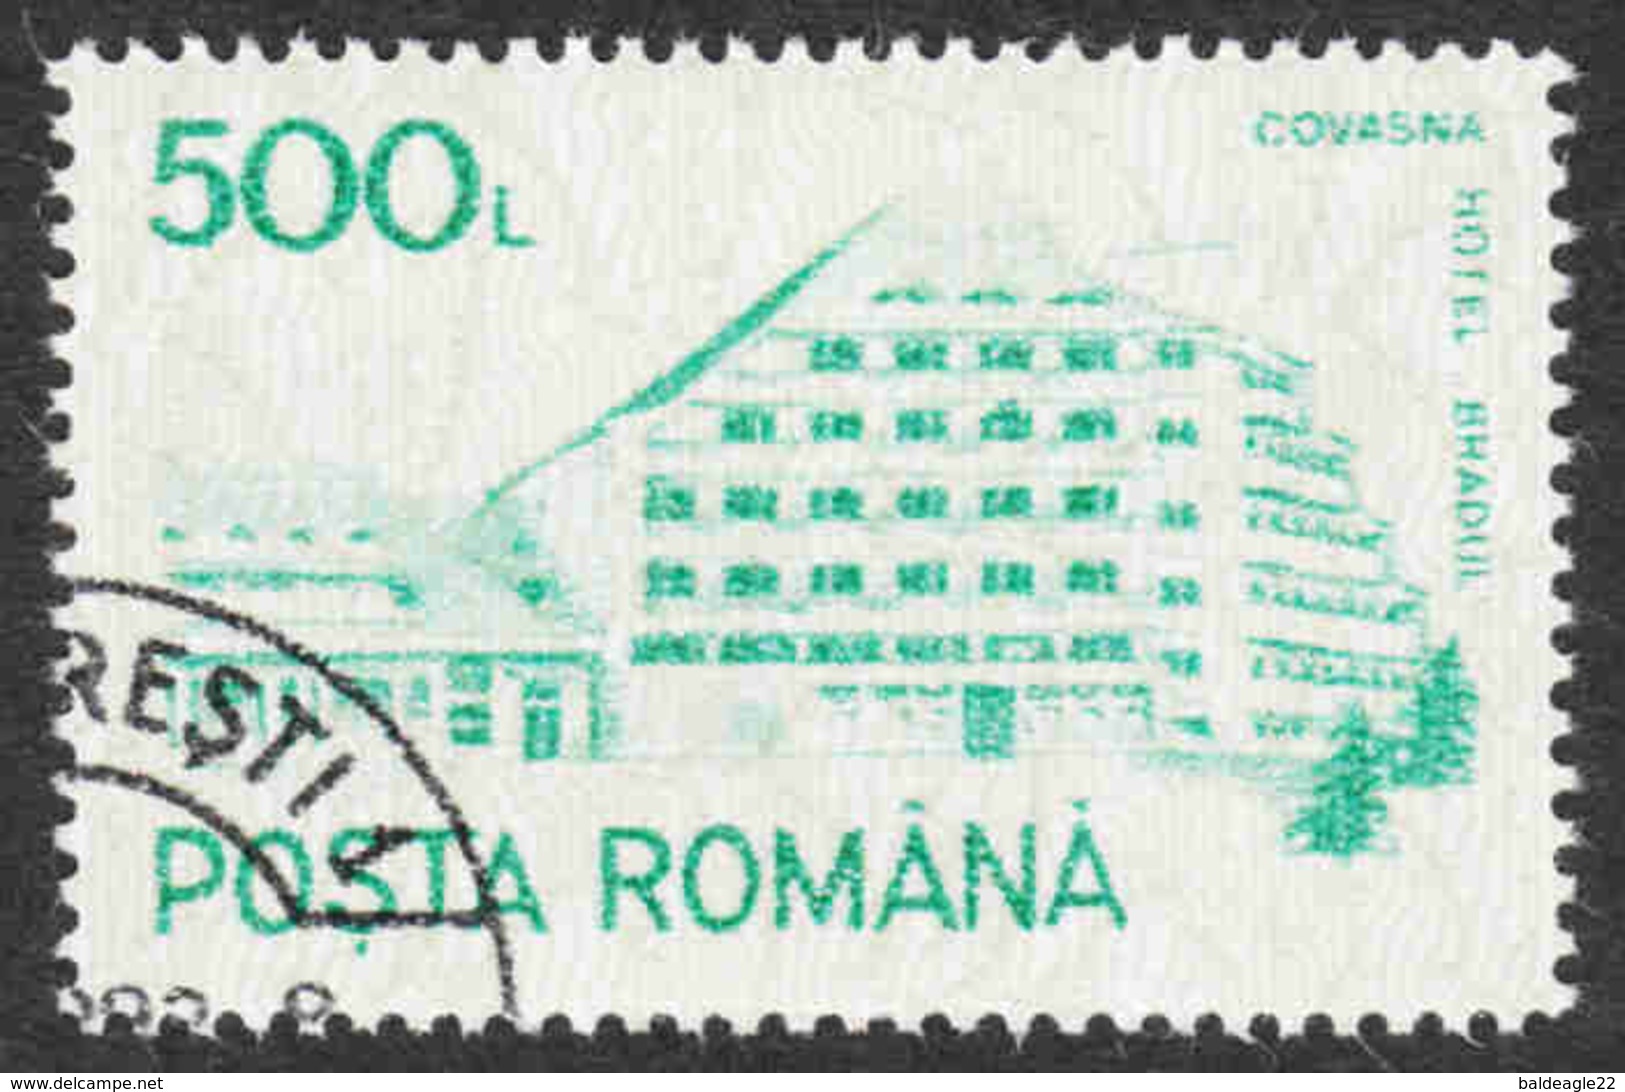 Romania - Scott #3683 CTO - Full Gum - Never Hinged (2) - Used Stamps